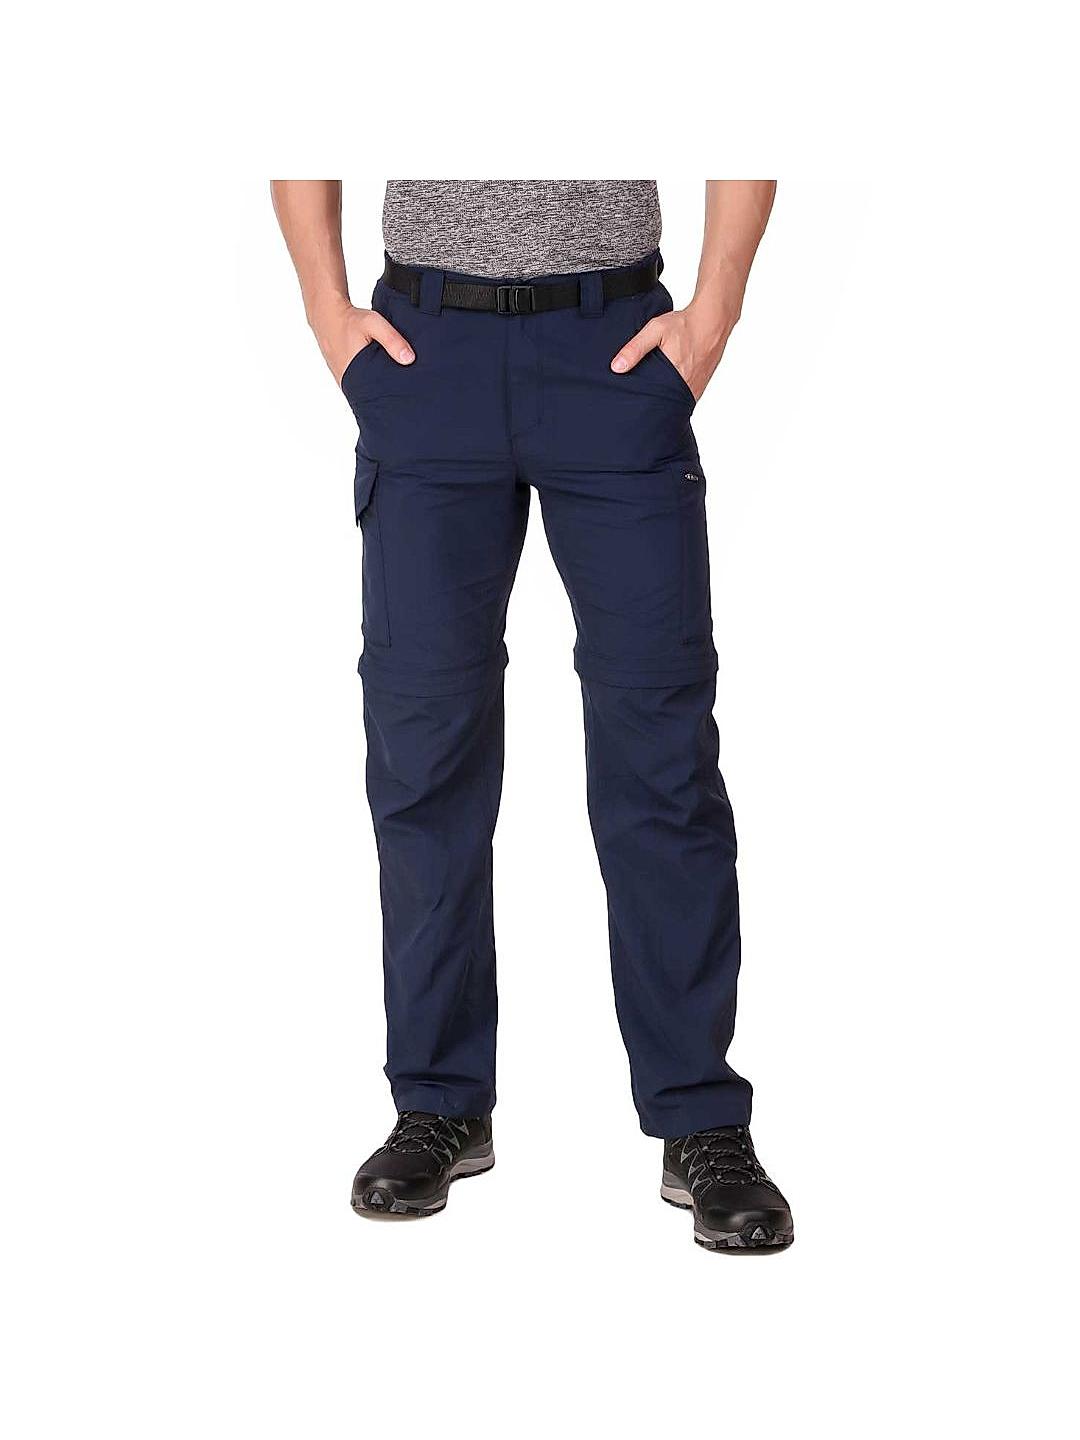 BC Clothing Men's Convertible Cargo Pants | Mens outfits, Cargo pants, Men